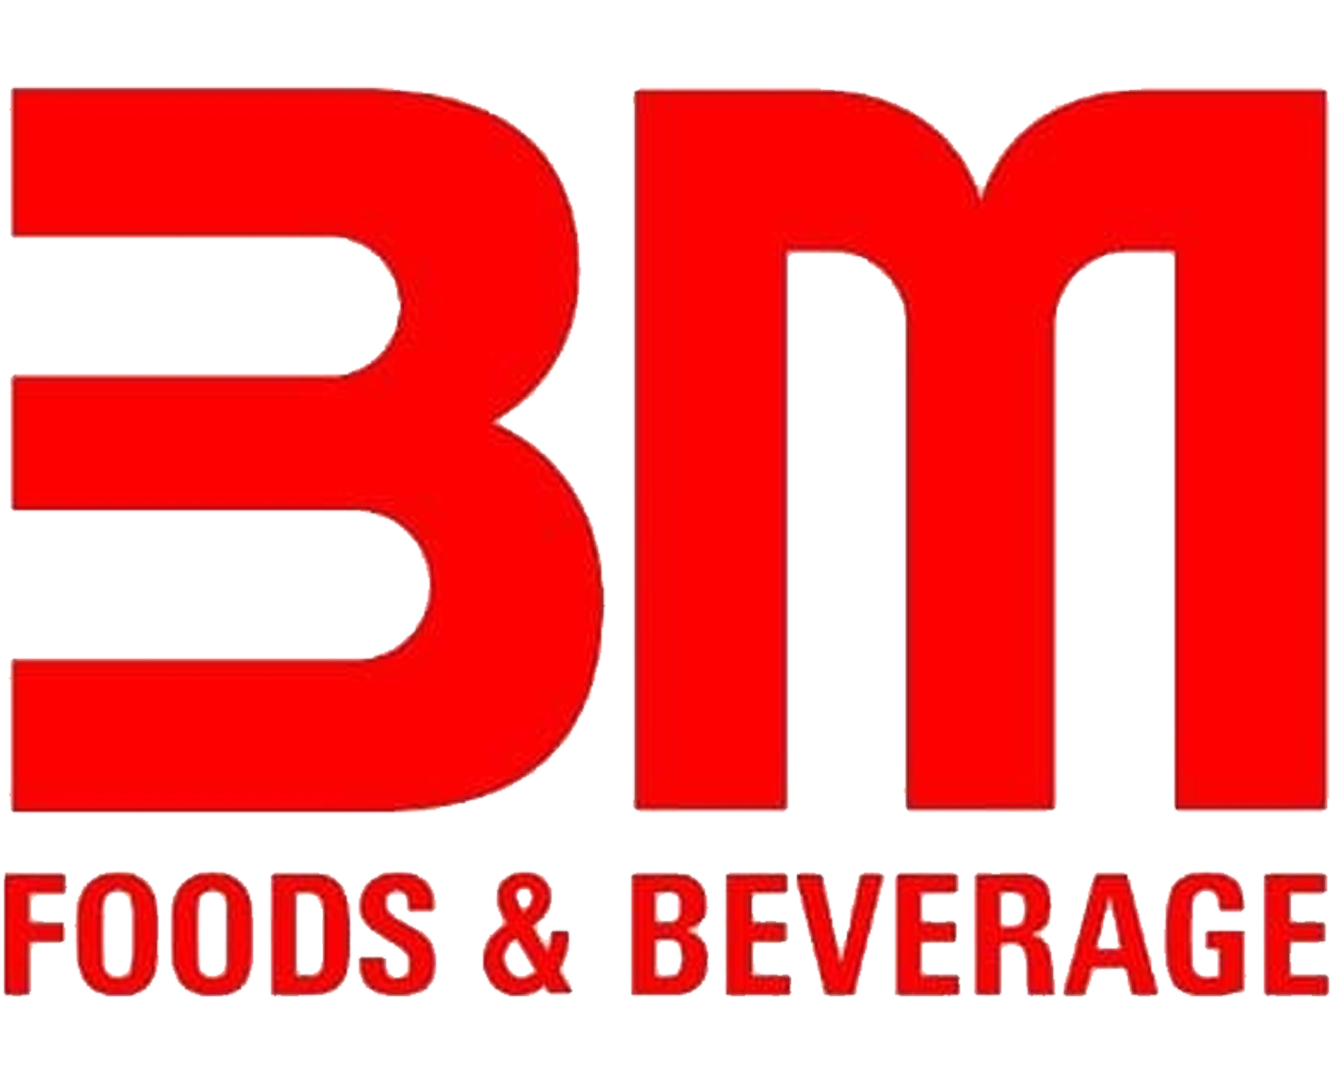 3M Foods & Beverage